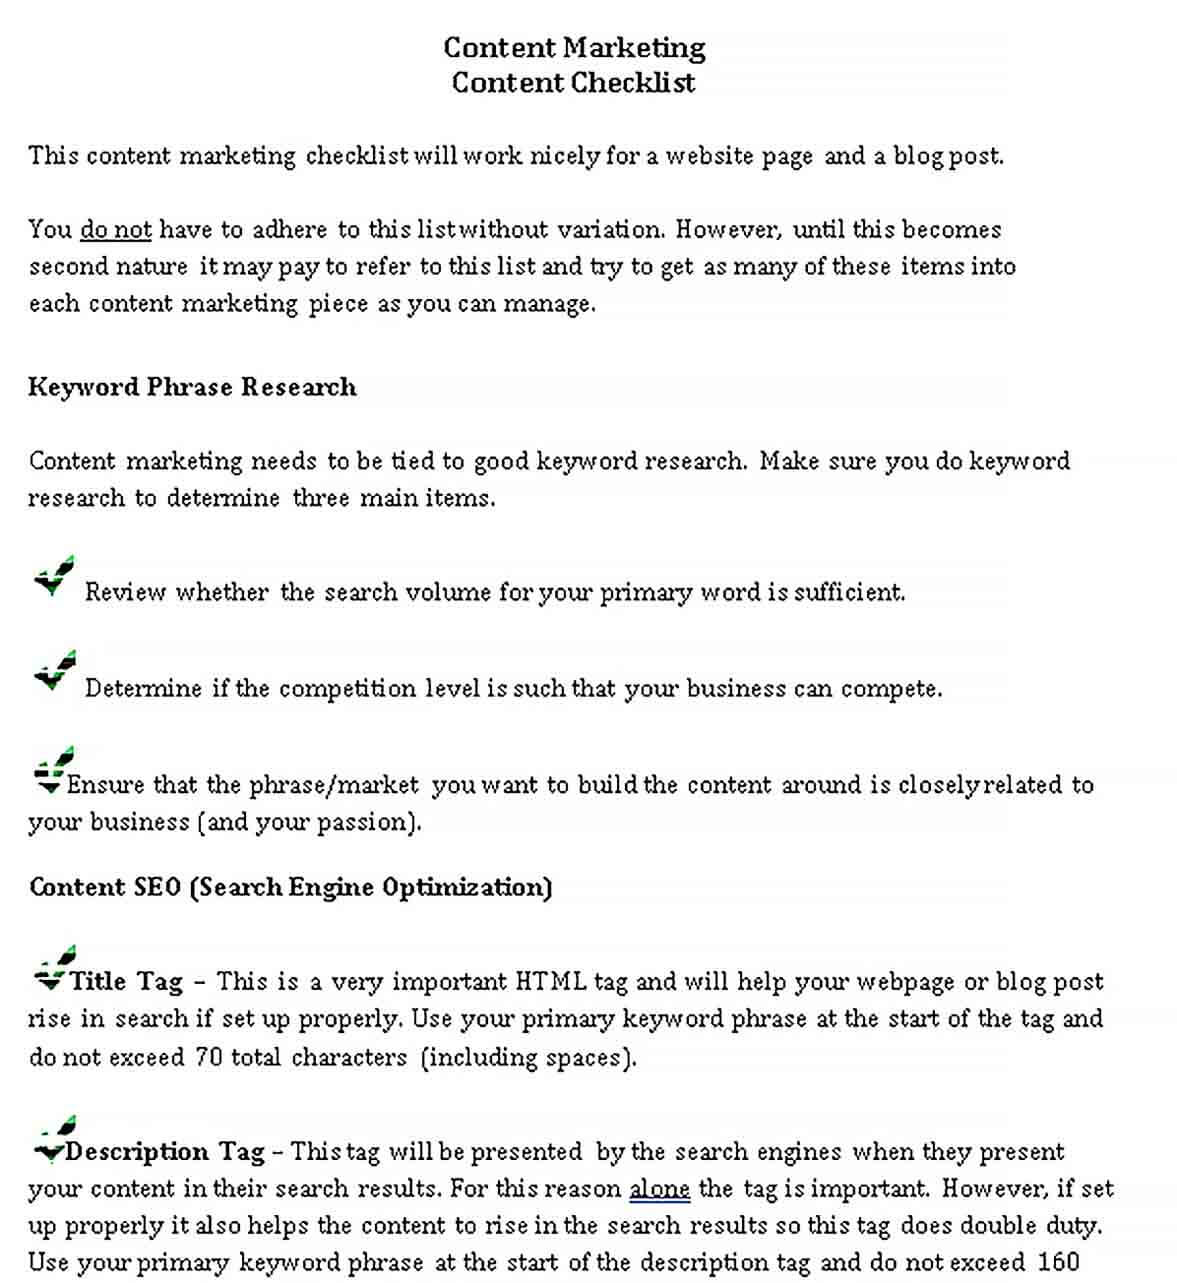 Sample Content Marketing Checklist